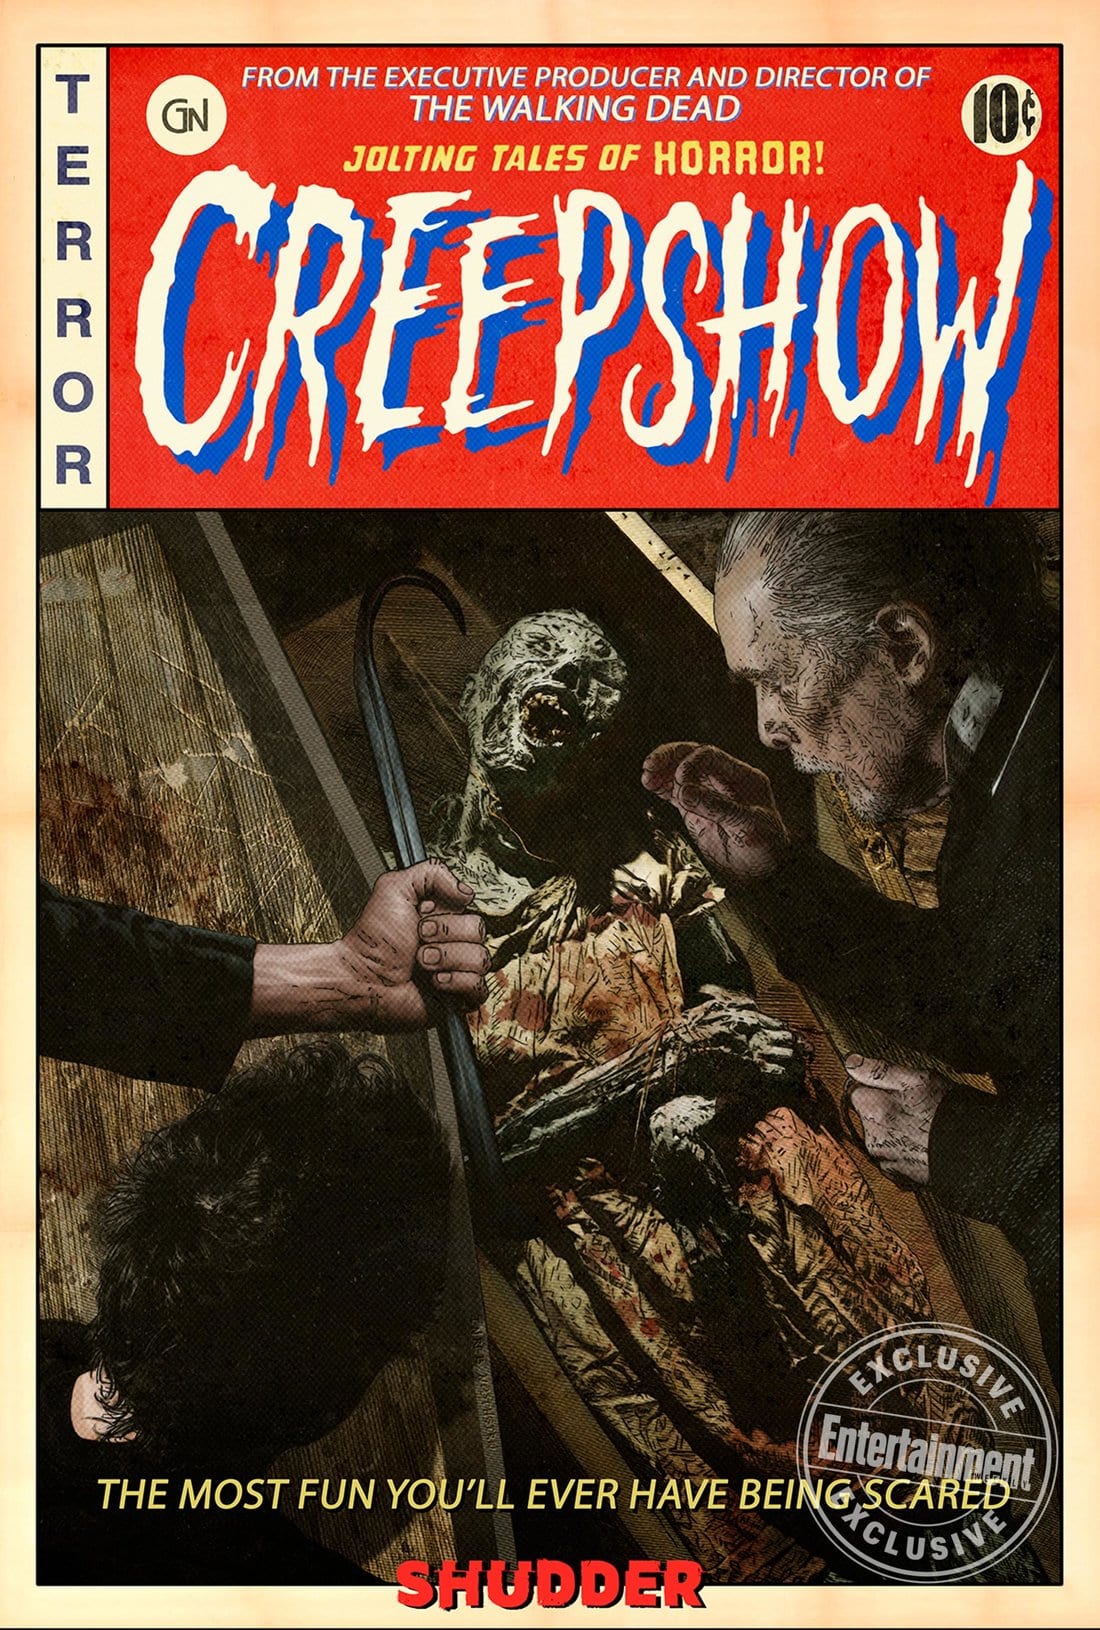 Creepshow TV Series Poster